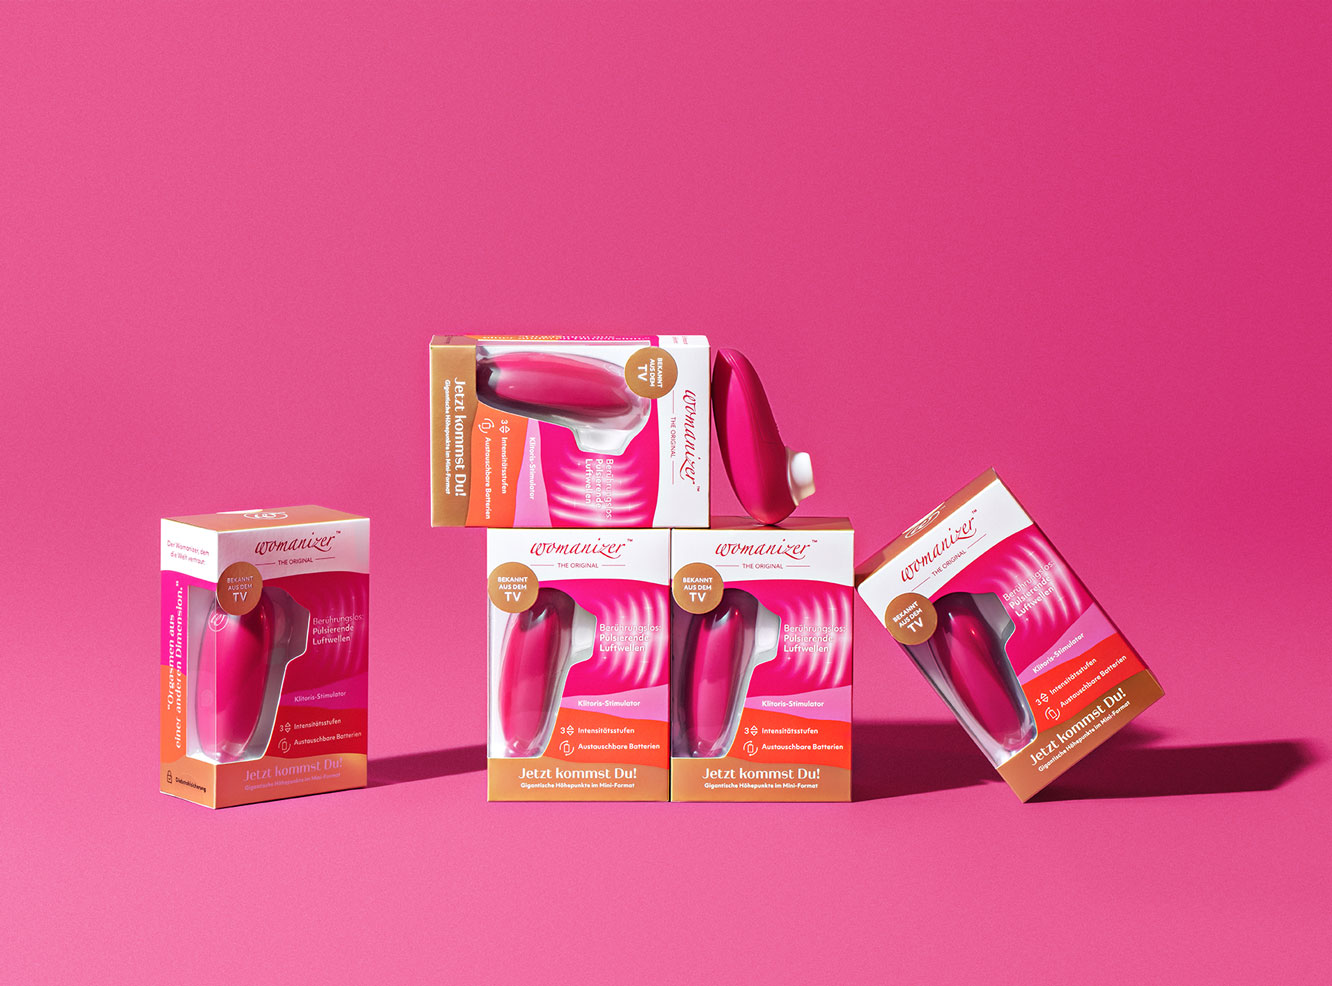 OCIO Studio Create Packaging Design for Womanizer Mini a Premium Intimate Pleasure Product